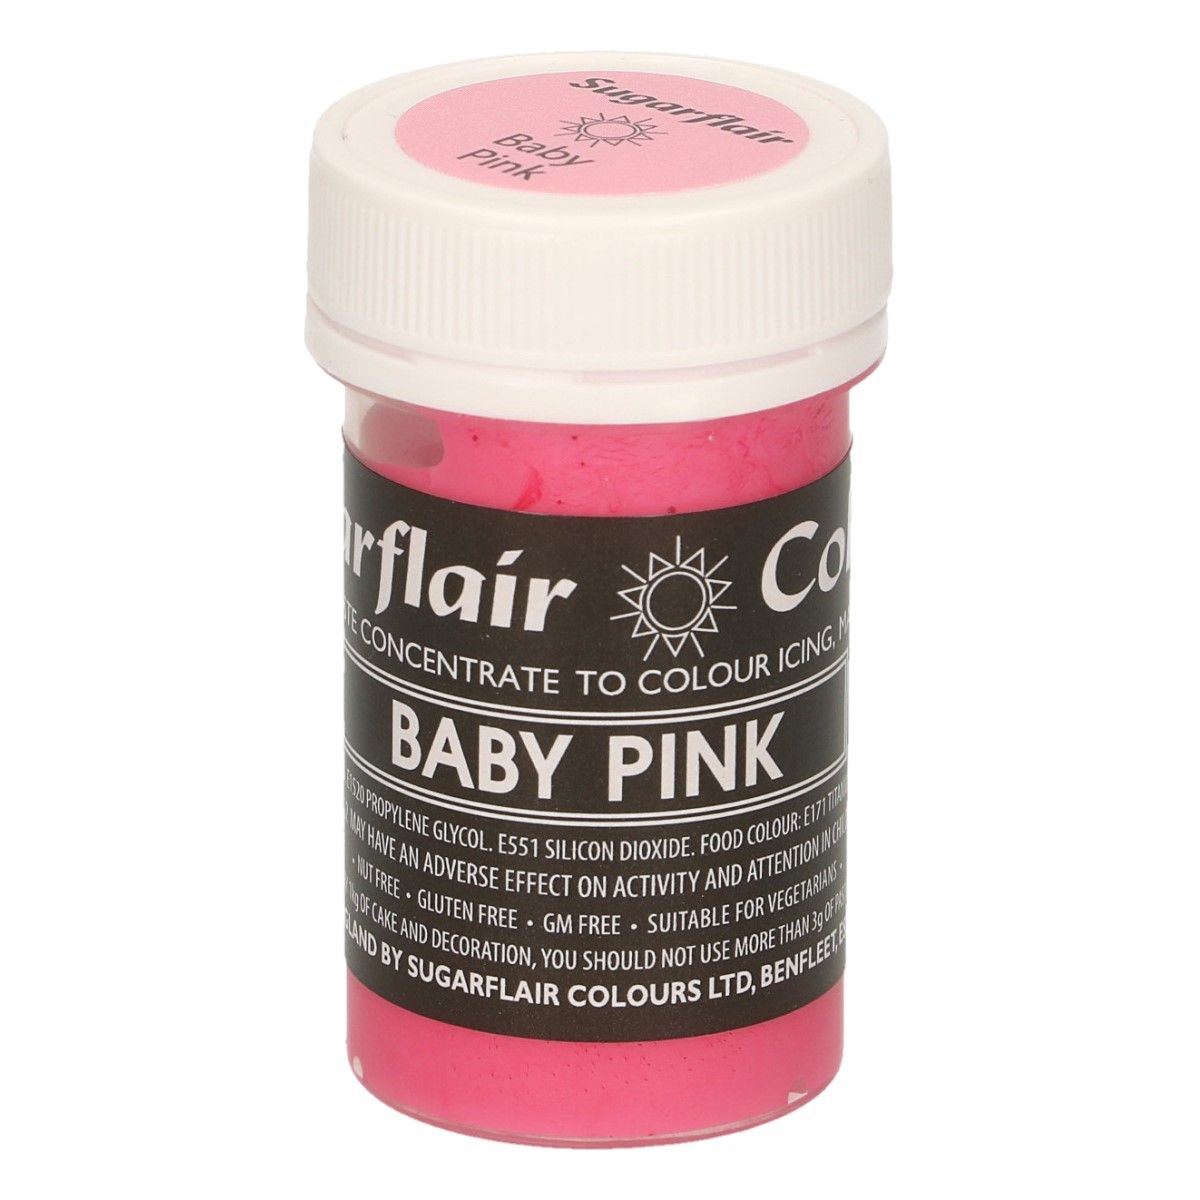 Sugarflair Pastel Colour Baby Pink, 25g